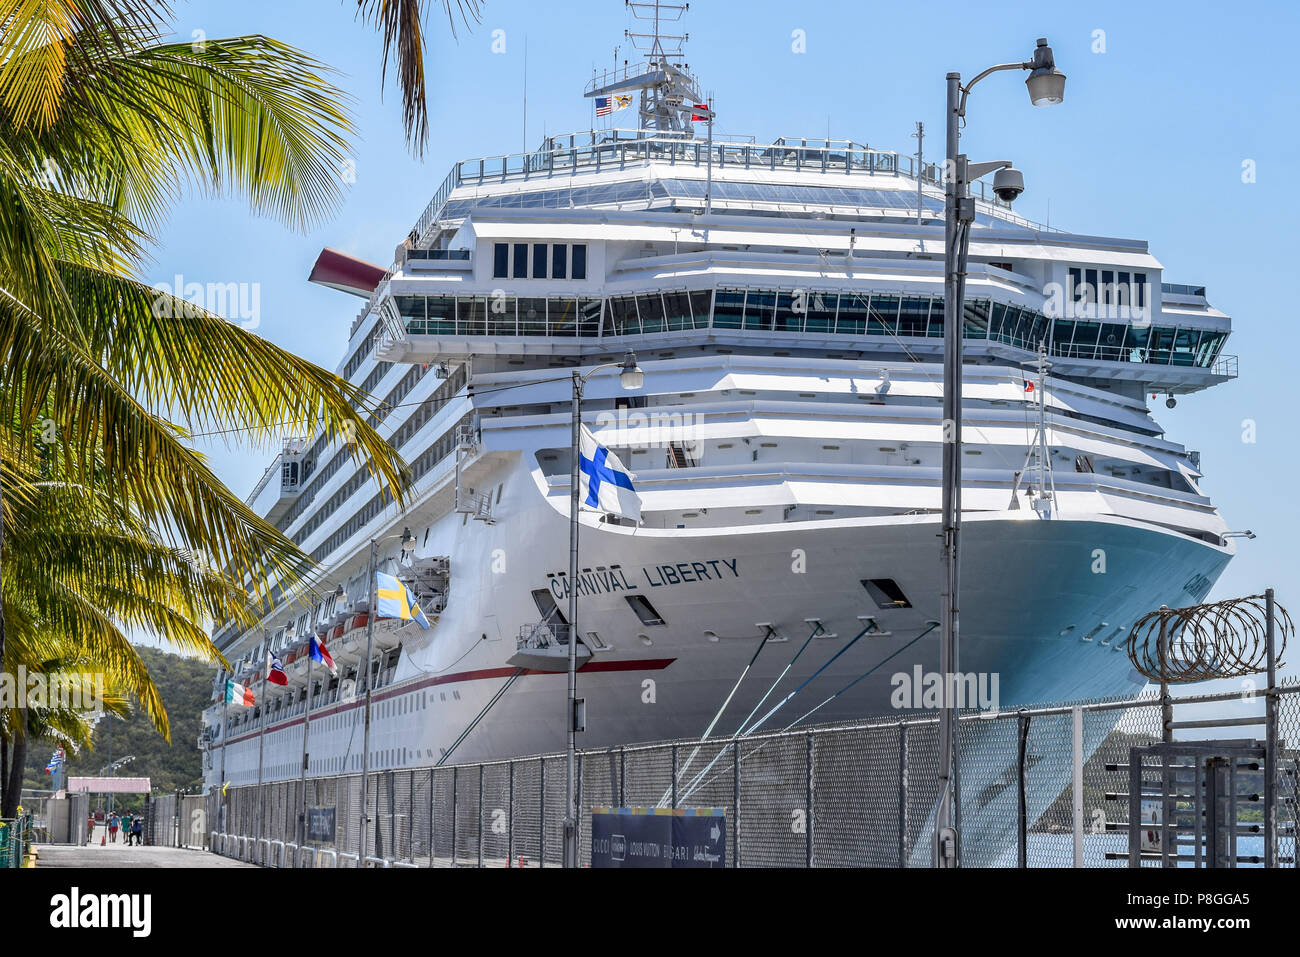 Saint Thomas, US Virgin Islands - April 01 2014: Carnival Liberty Cruise Ship docked in the Saint Thomas Cruise Port Terminal Stock Photo